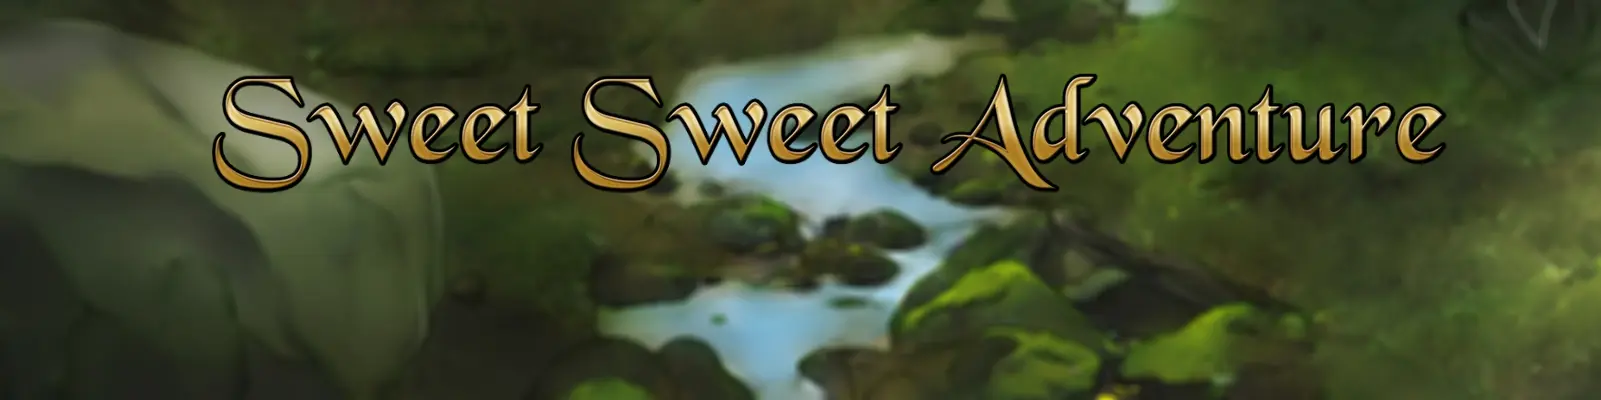 Sweet Sweet Adventures [v0.1.0.0] main image